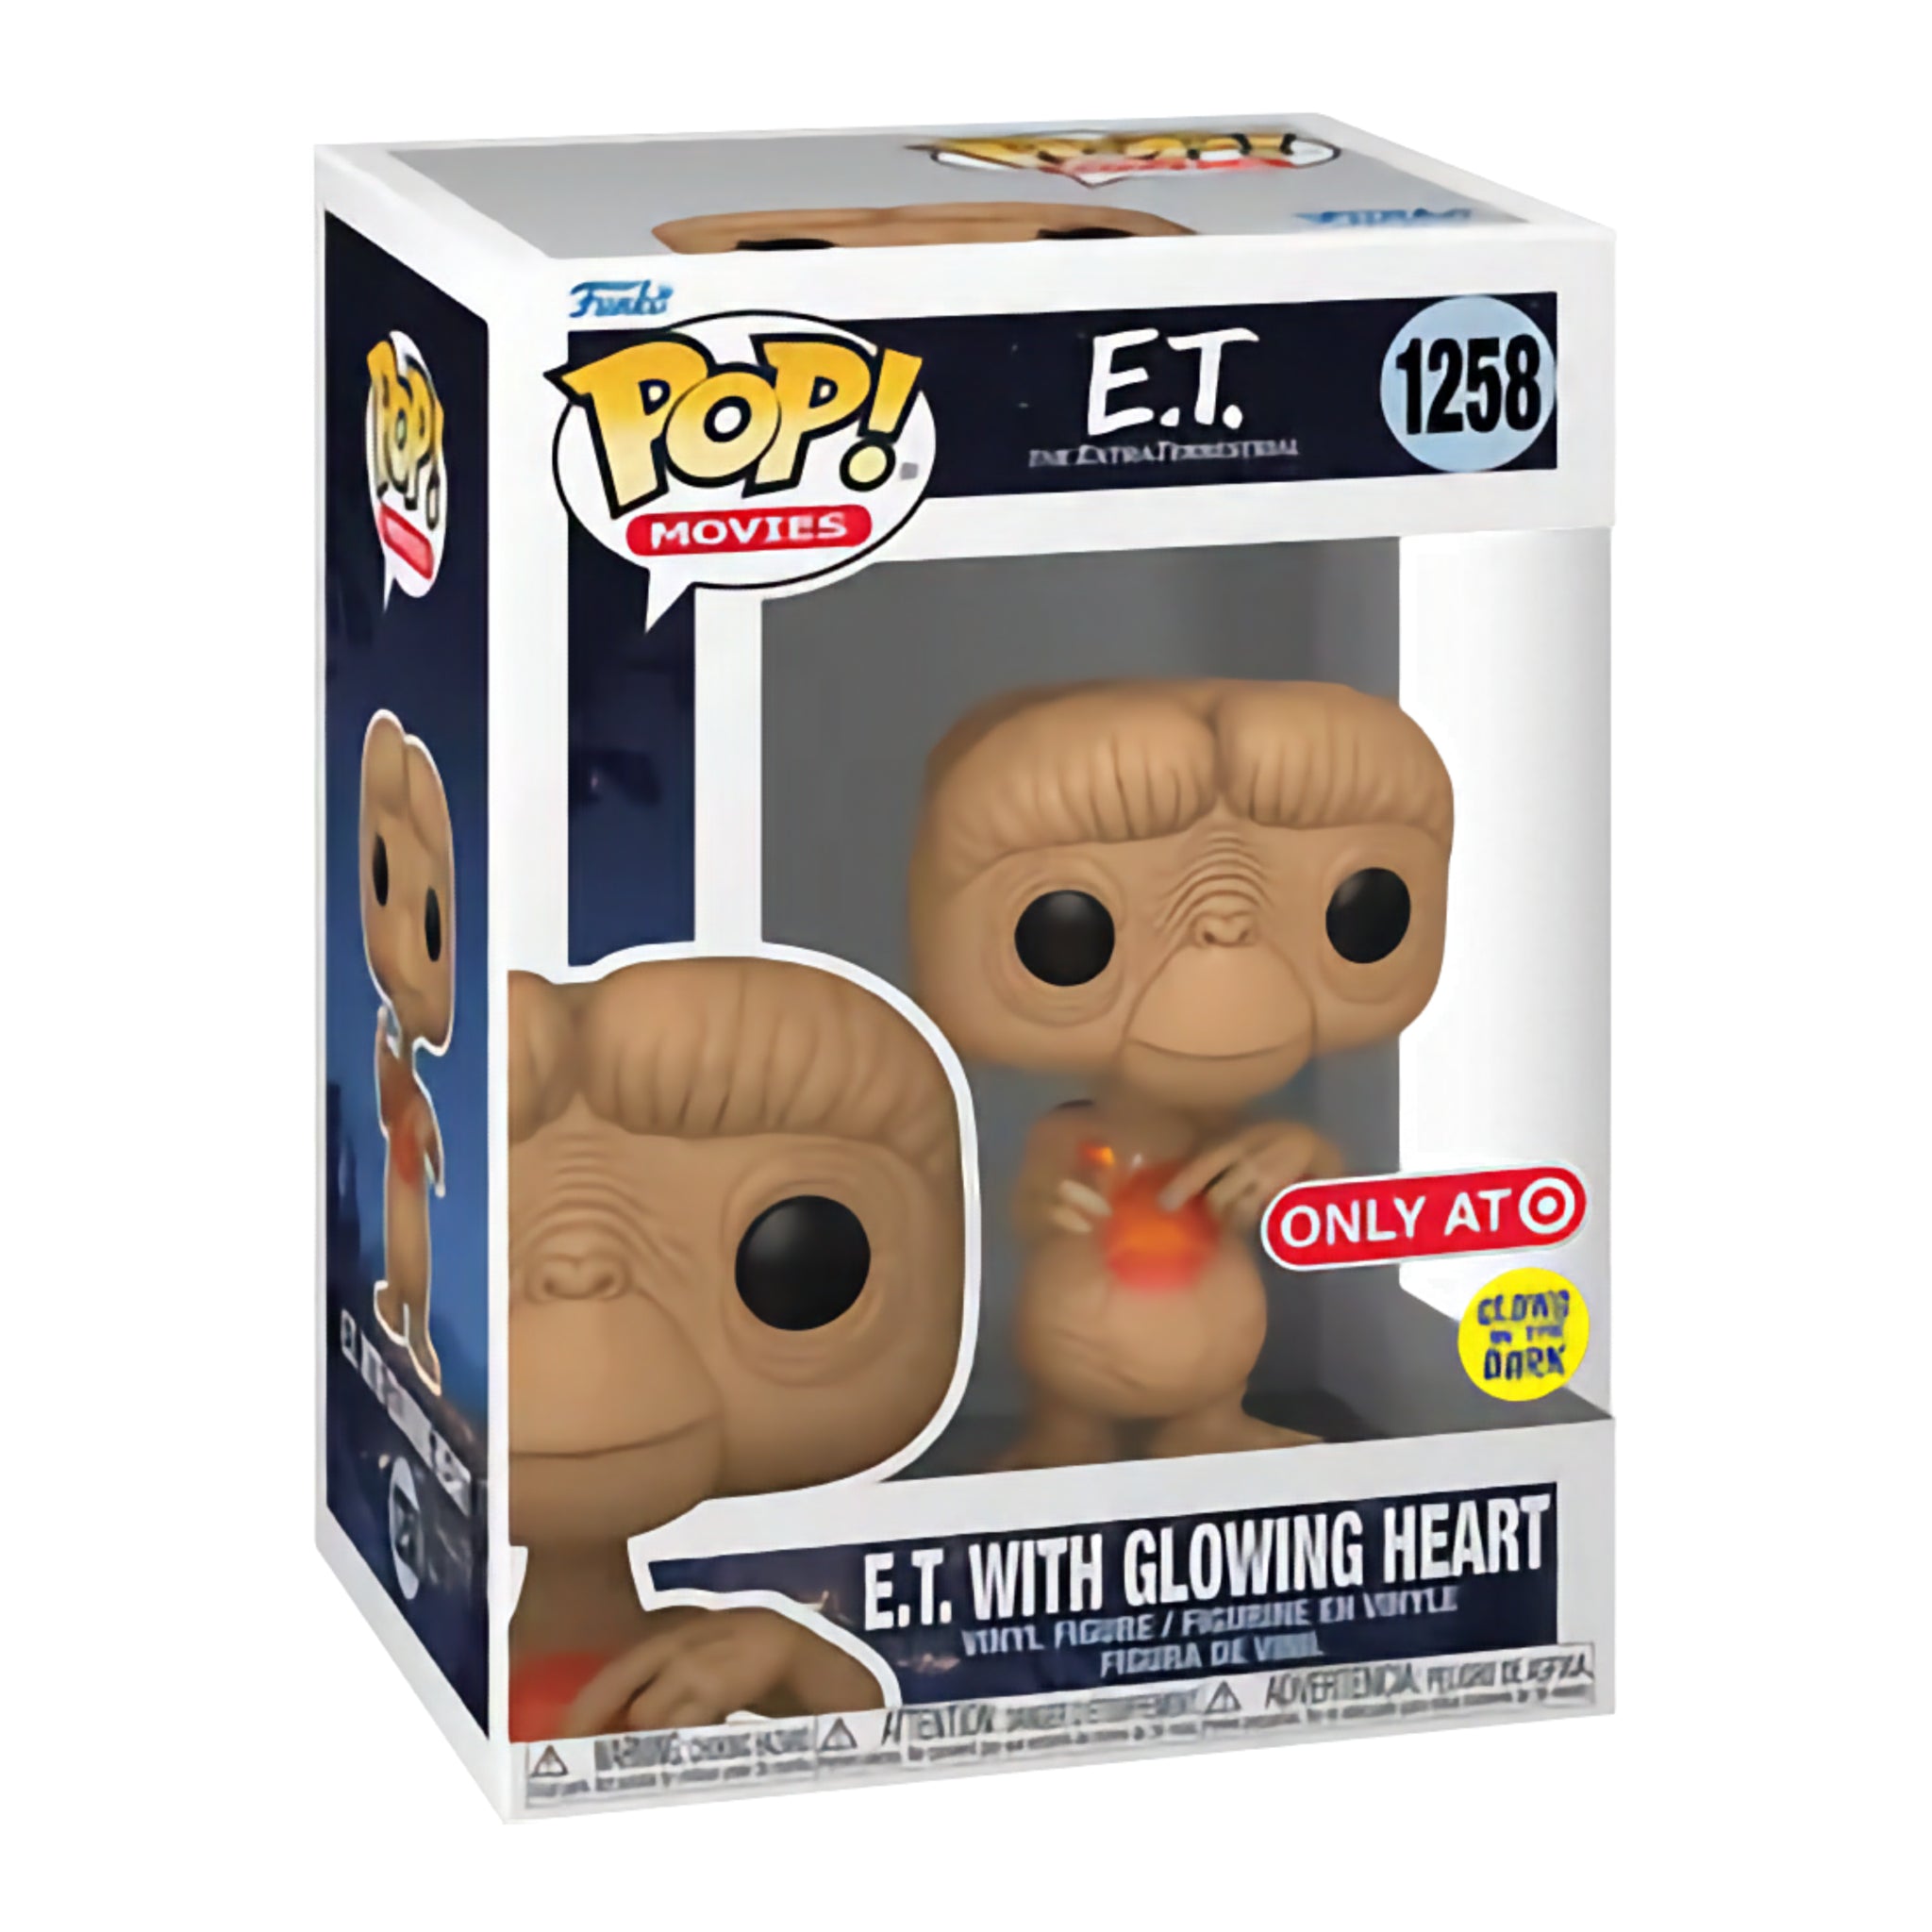 E.T. with Glowing Heart GITD Funko Pop! TARGET EXCLUSIVE